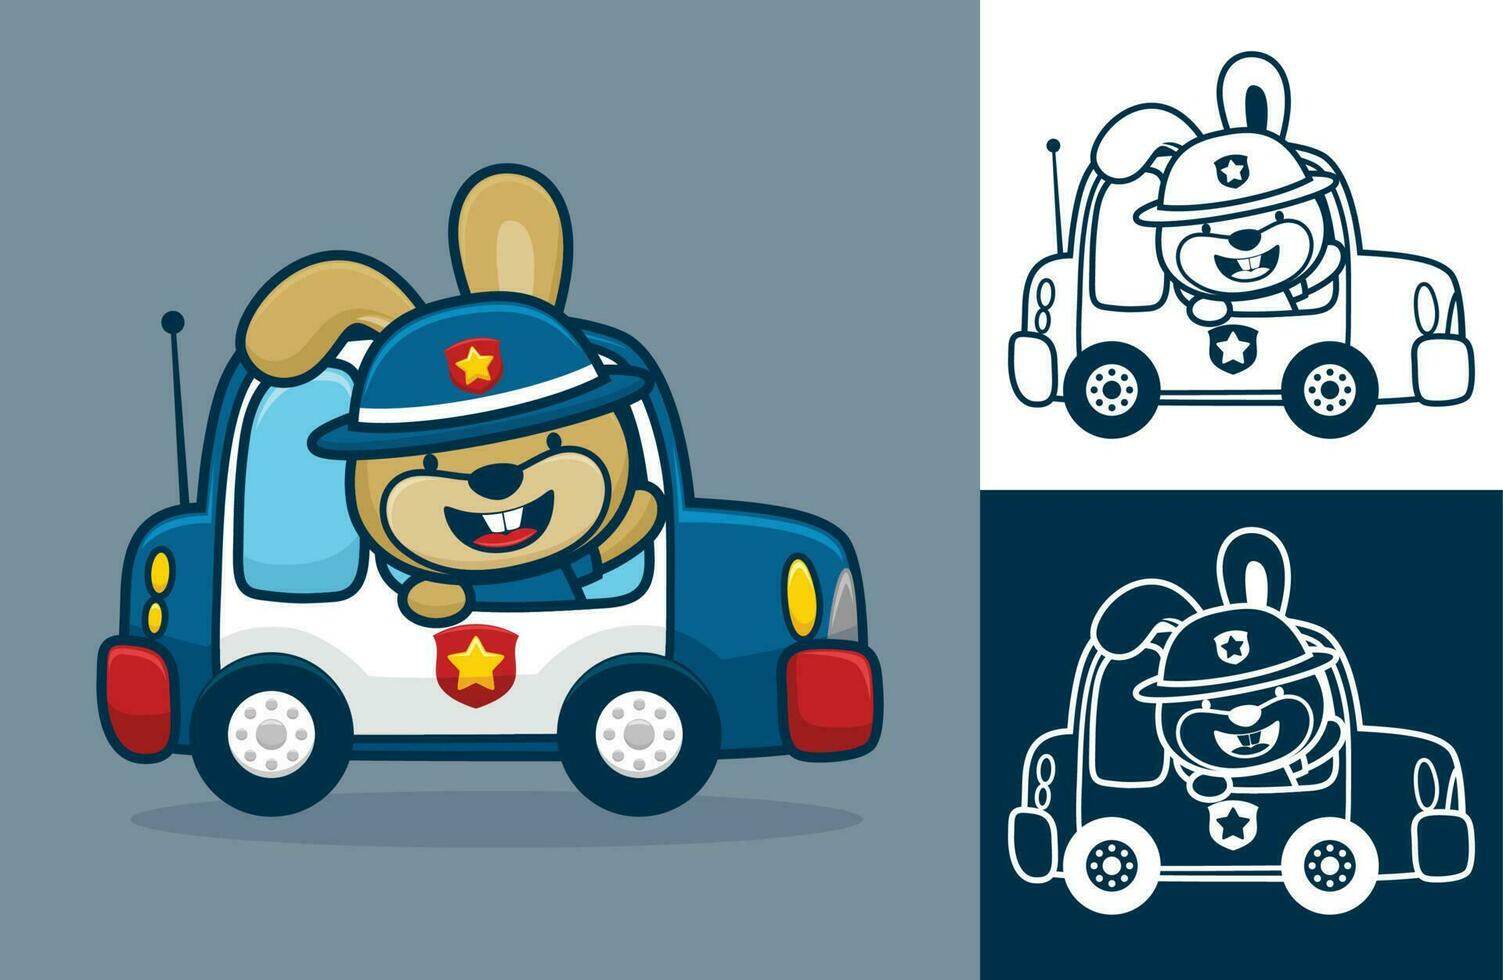 Rabbit wearing cop hat on police car. Vector cartoon illustration in